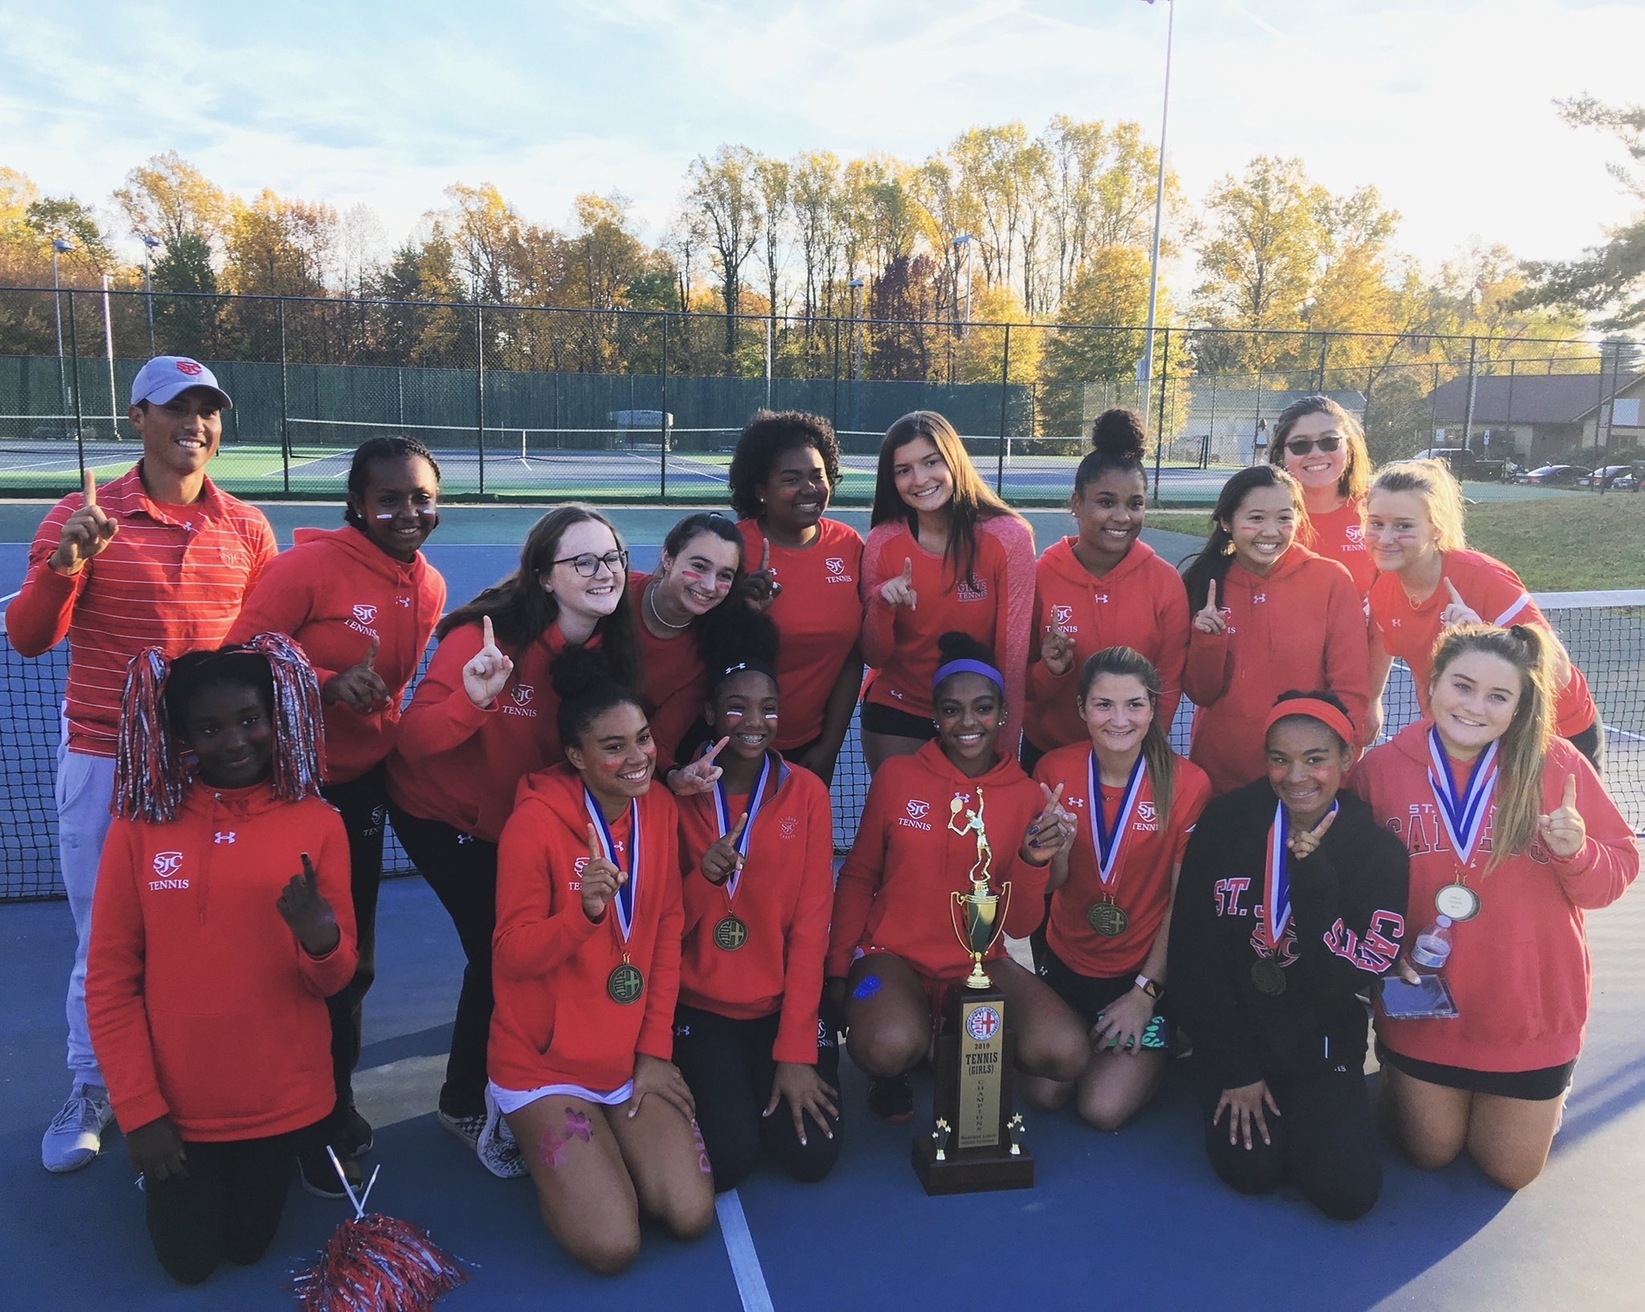 Sister act helps St. John’s win WCAC girls’ tennis championship